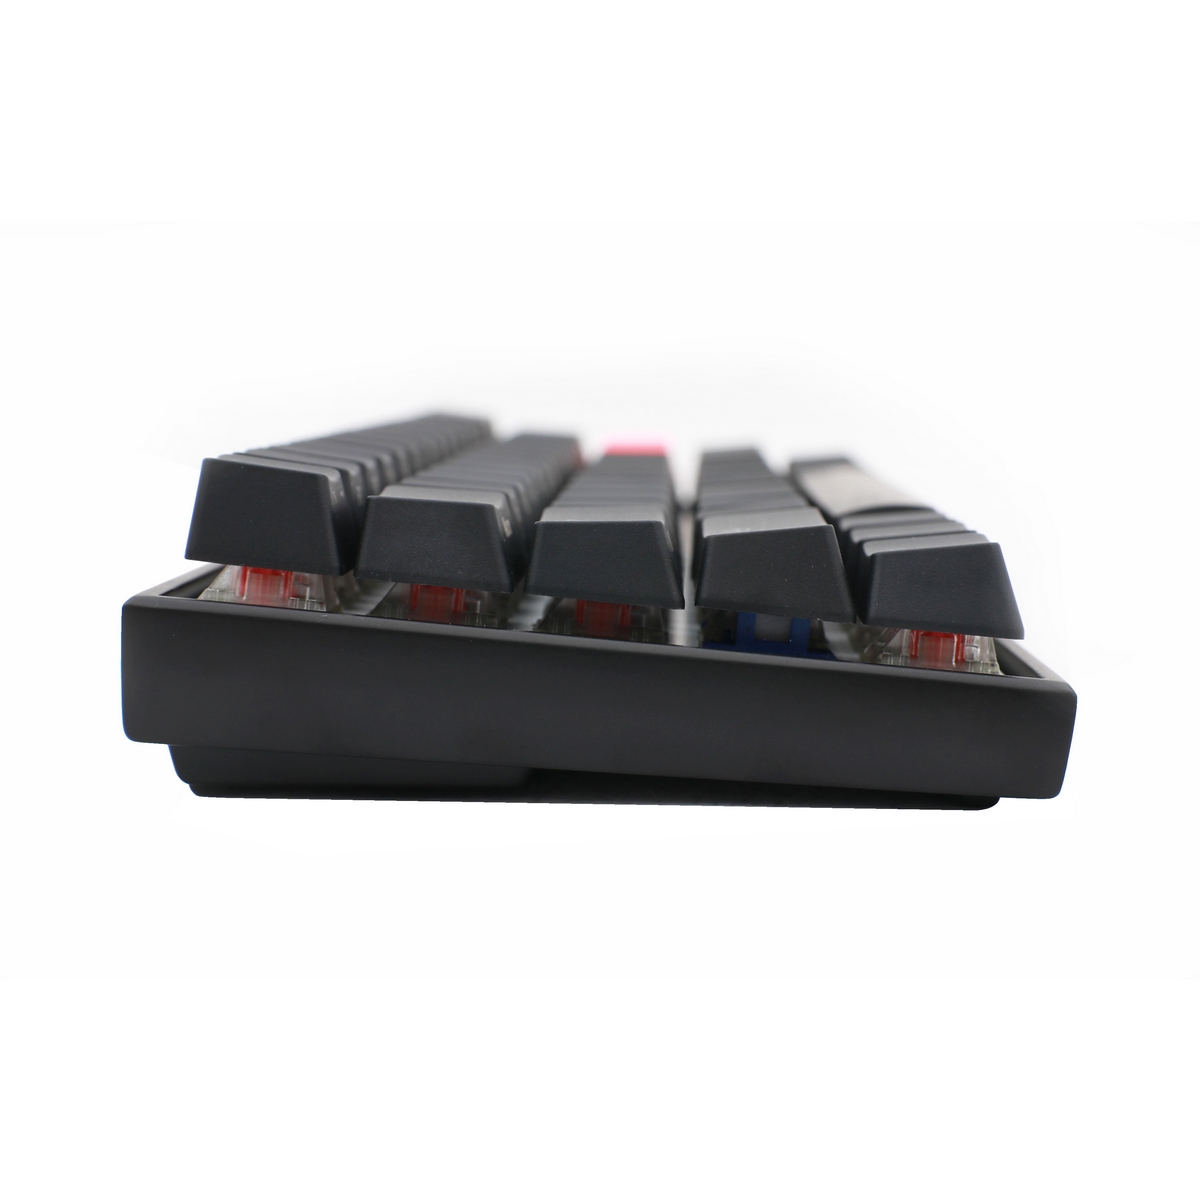 Ducky - Ducky Mecha Mini 60% RGB USB Mechanical Gaming Keyboard - Cherry MX Brown UK Layout